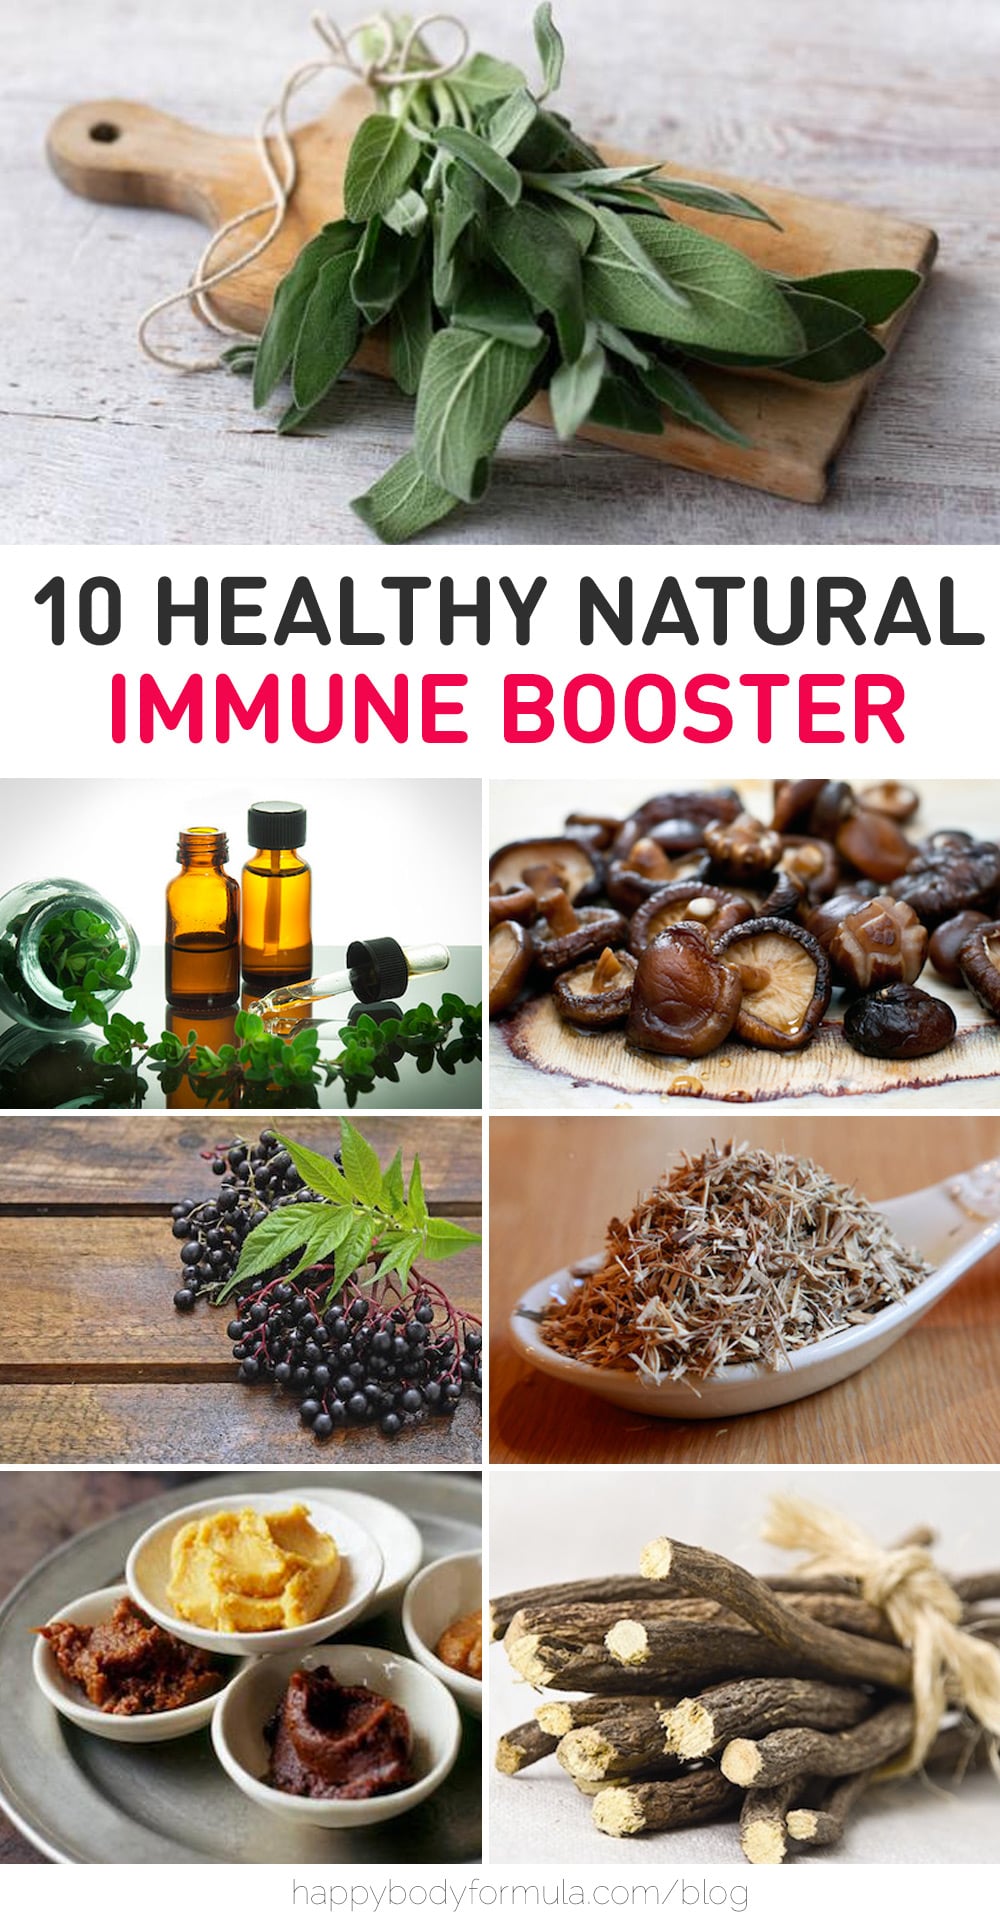 10 Natural Immune Boosters | Happybodyformula.com